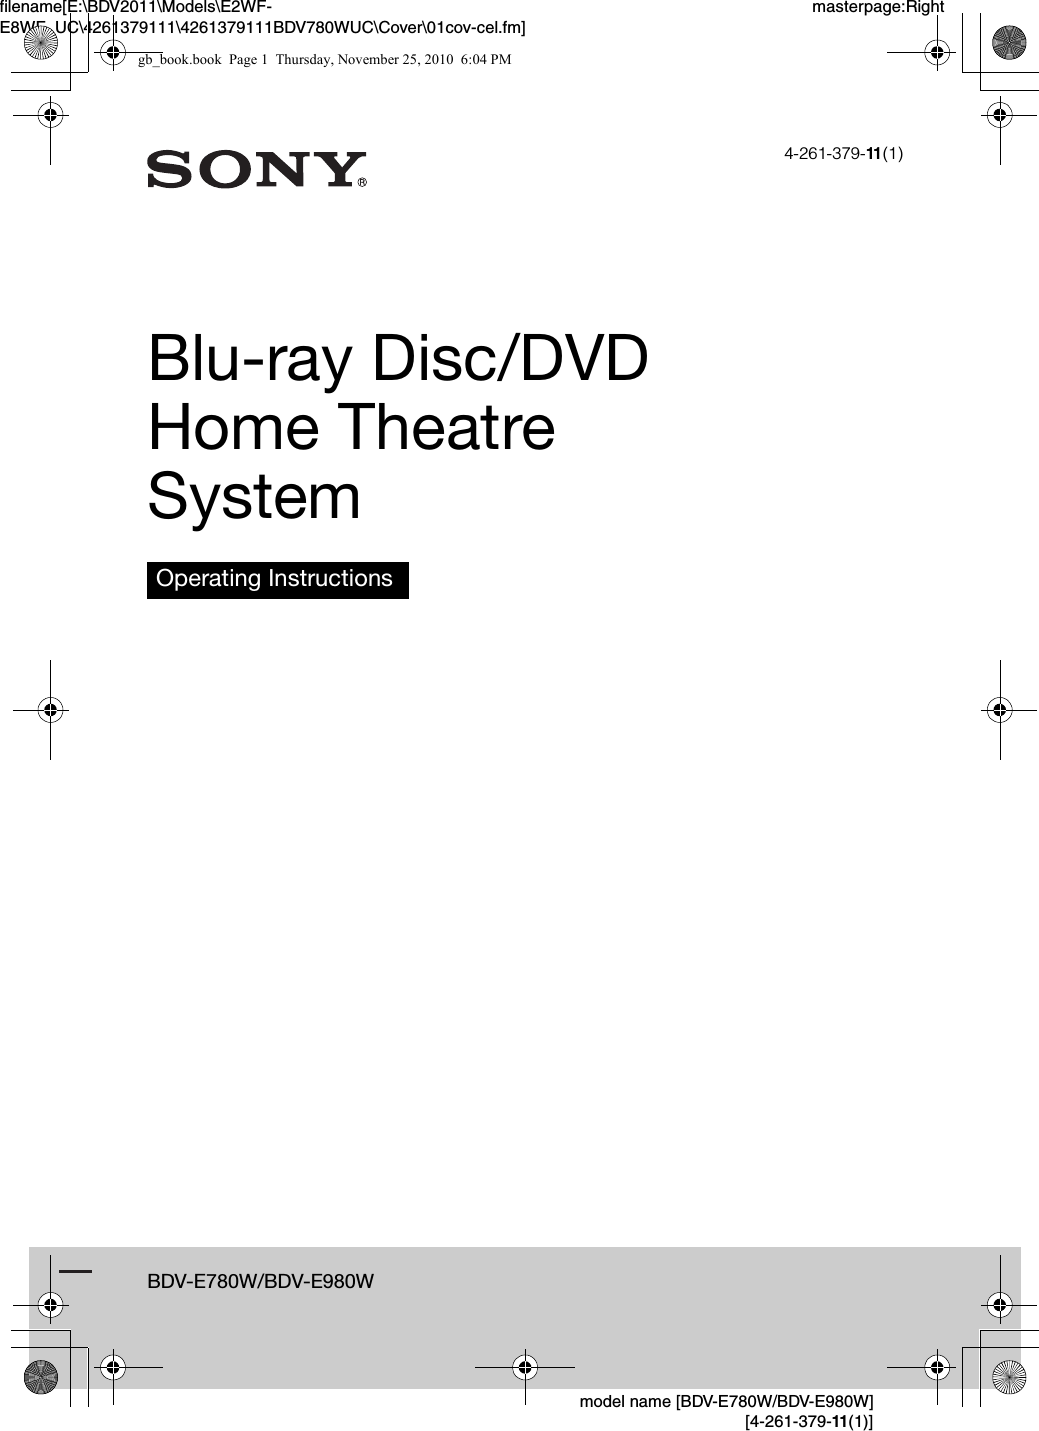 filename[E:\BDV2011\Models\E2WF-E8WF_UC\4261379111\4261379111BDV780WUC\Cover\01cov-cel.fm]masterpage:Right model name [BDV-E780W/BDV-E980W] [4-261-379-11 (1)]BDV-E780W/BDV-E980W4-261-379-11 (1)Blu-ray Disc/DVDHome Theatre SystemOperating Instructionsgb_book.book  Page 1  Thursday, November 25, 2010  6:04 PM